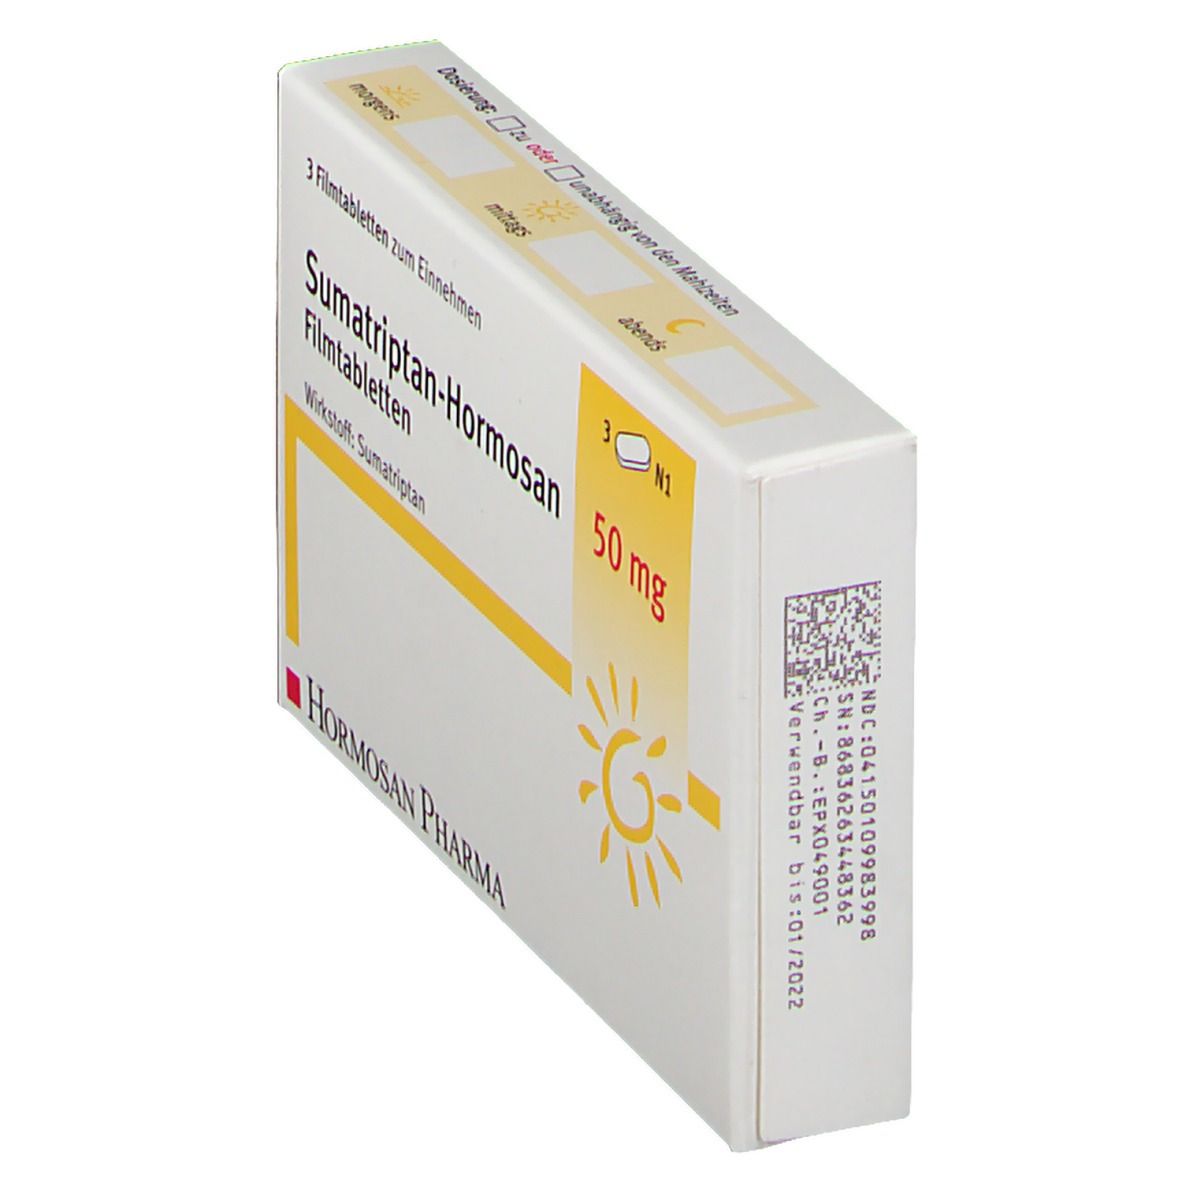 Sumatriptan-Hormosan 50 mg